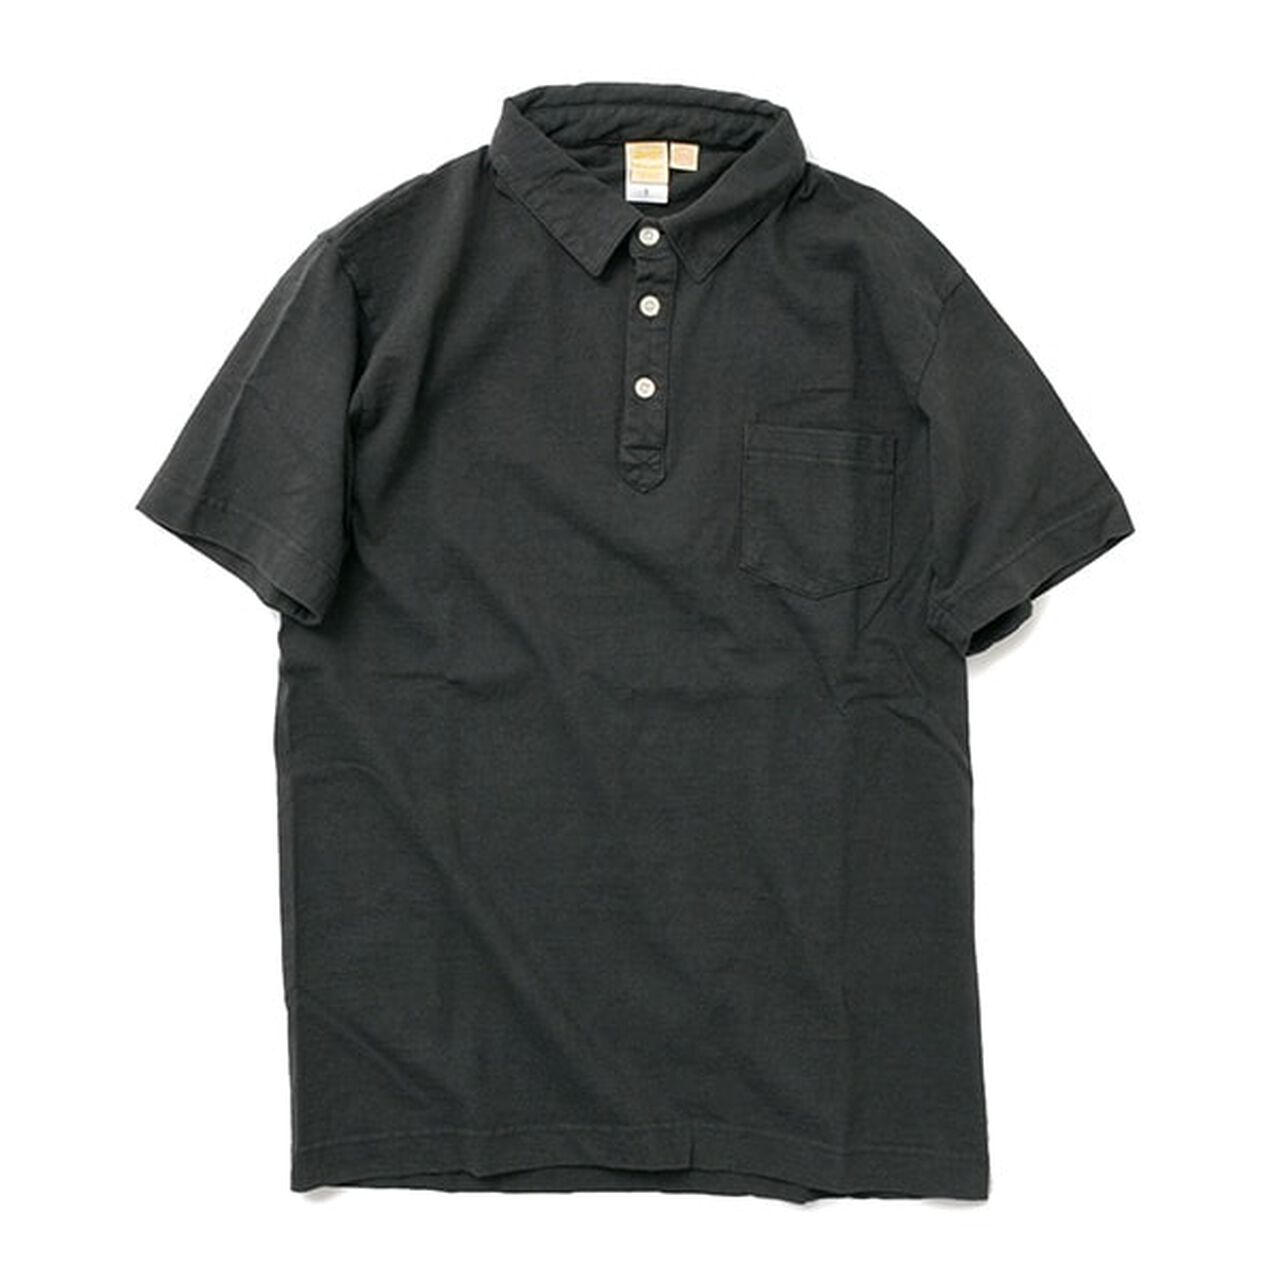 BR-1006 Hanging Jersey Short Sleeve Polo Shirt,Black, large image number 0